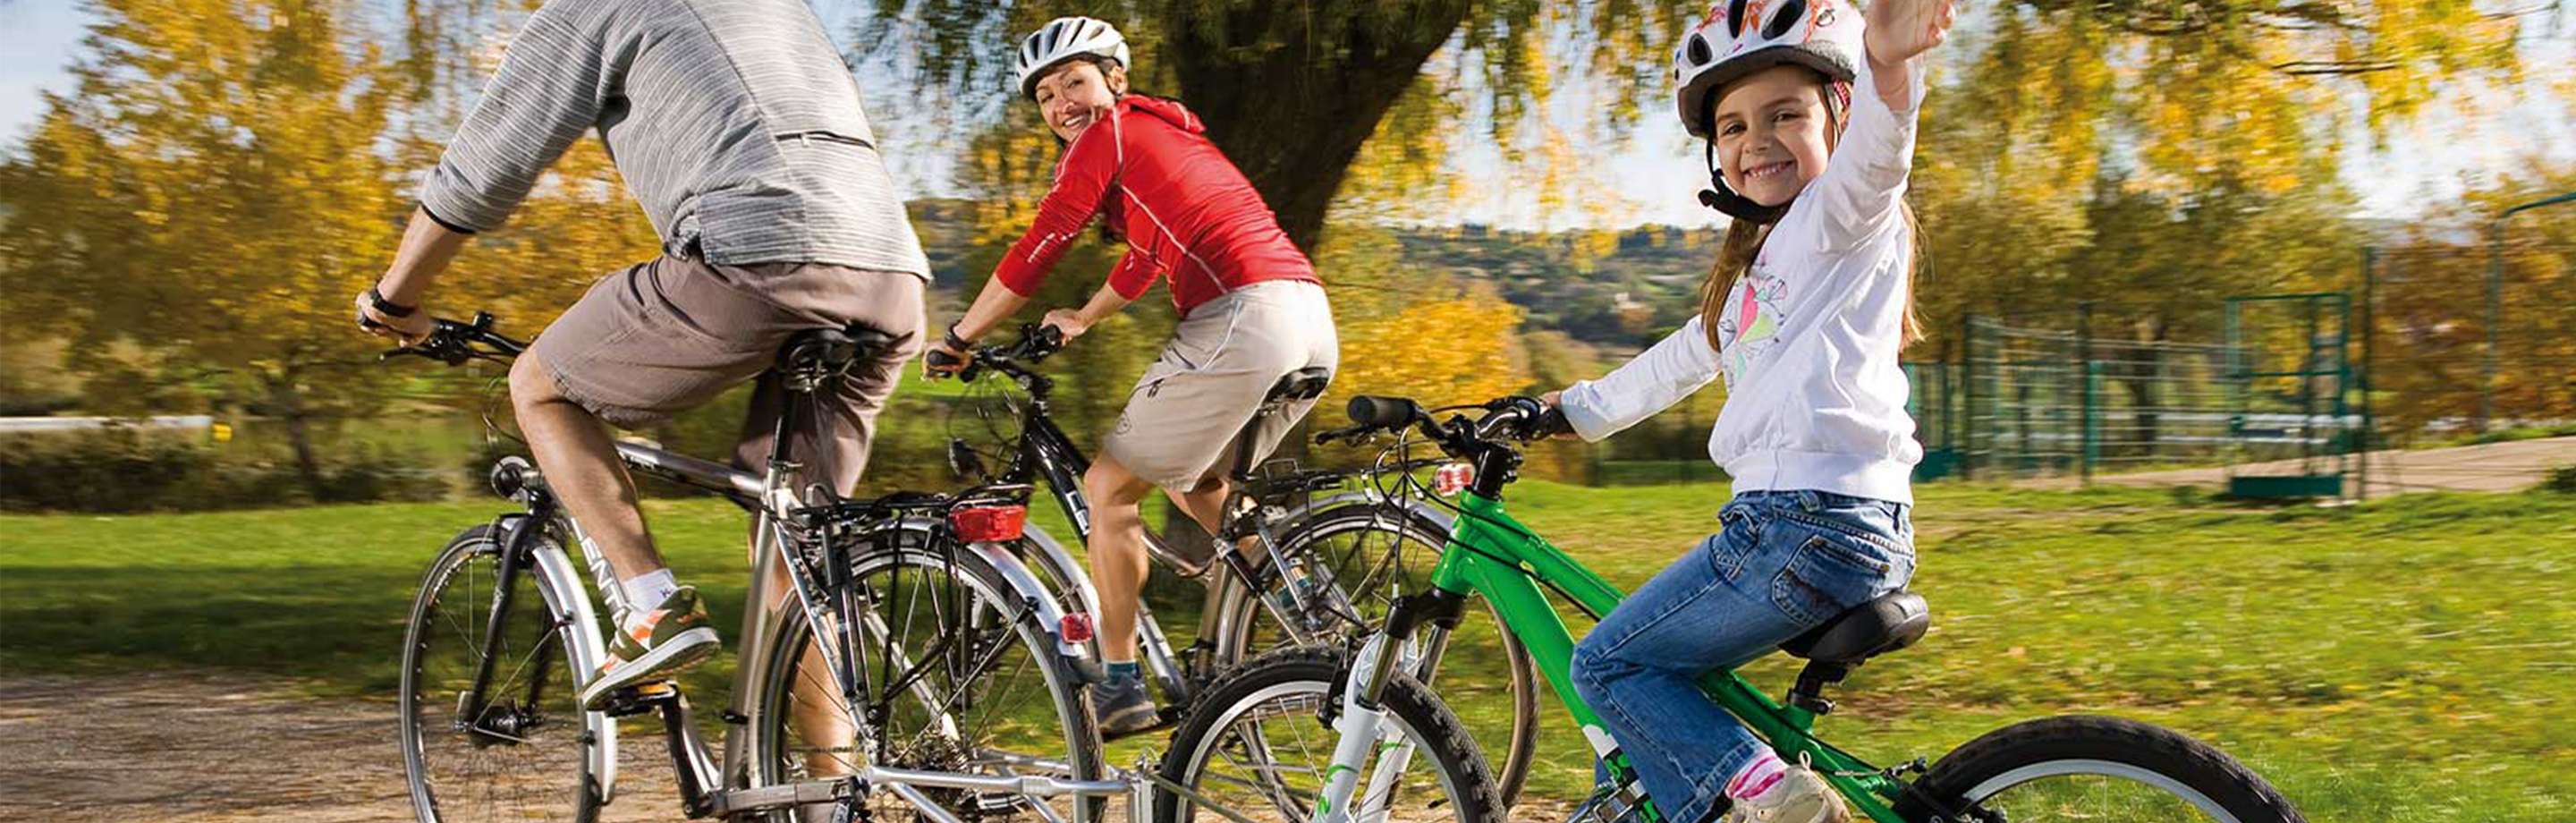 FollowMe tandemkoppeling: fietsplezier voor de hele familie